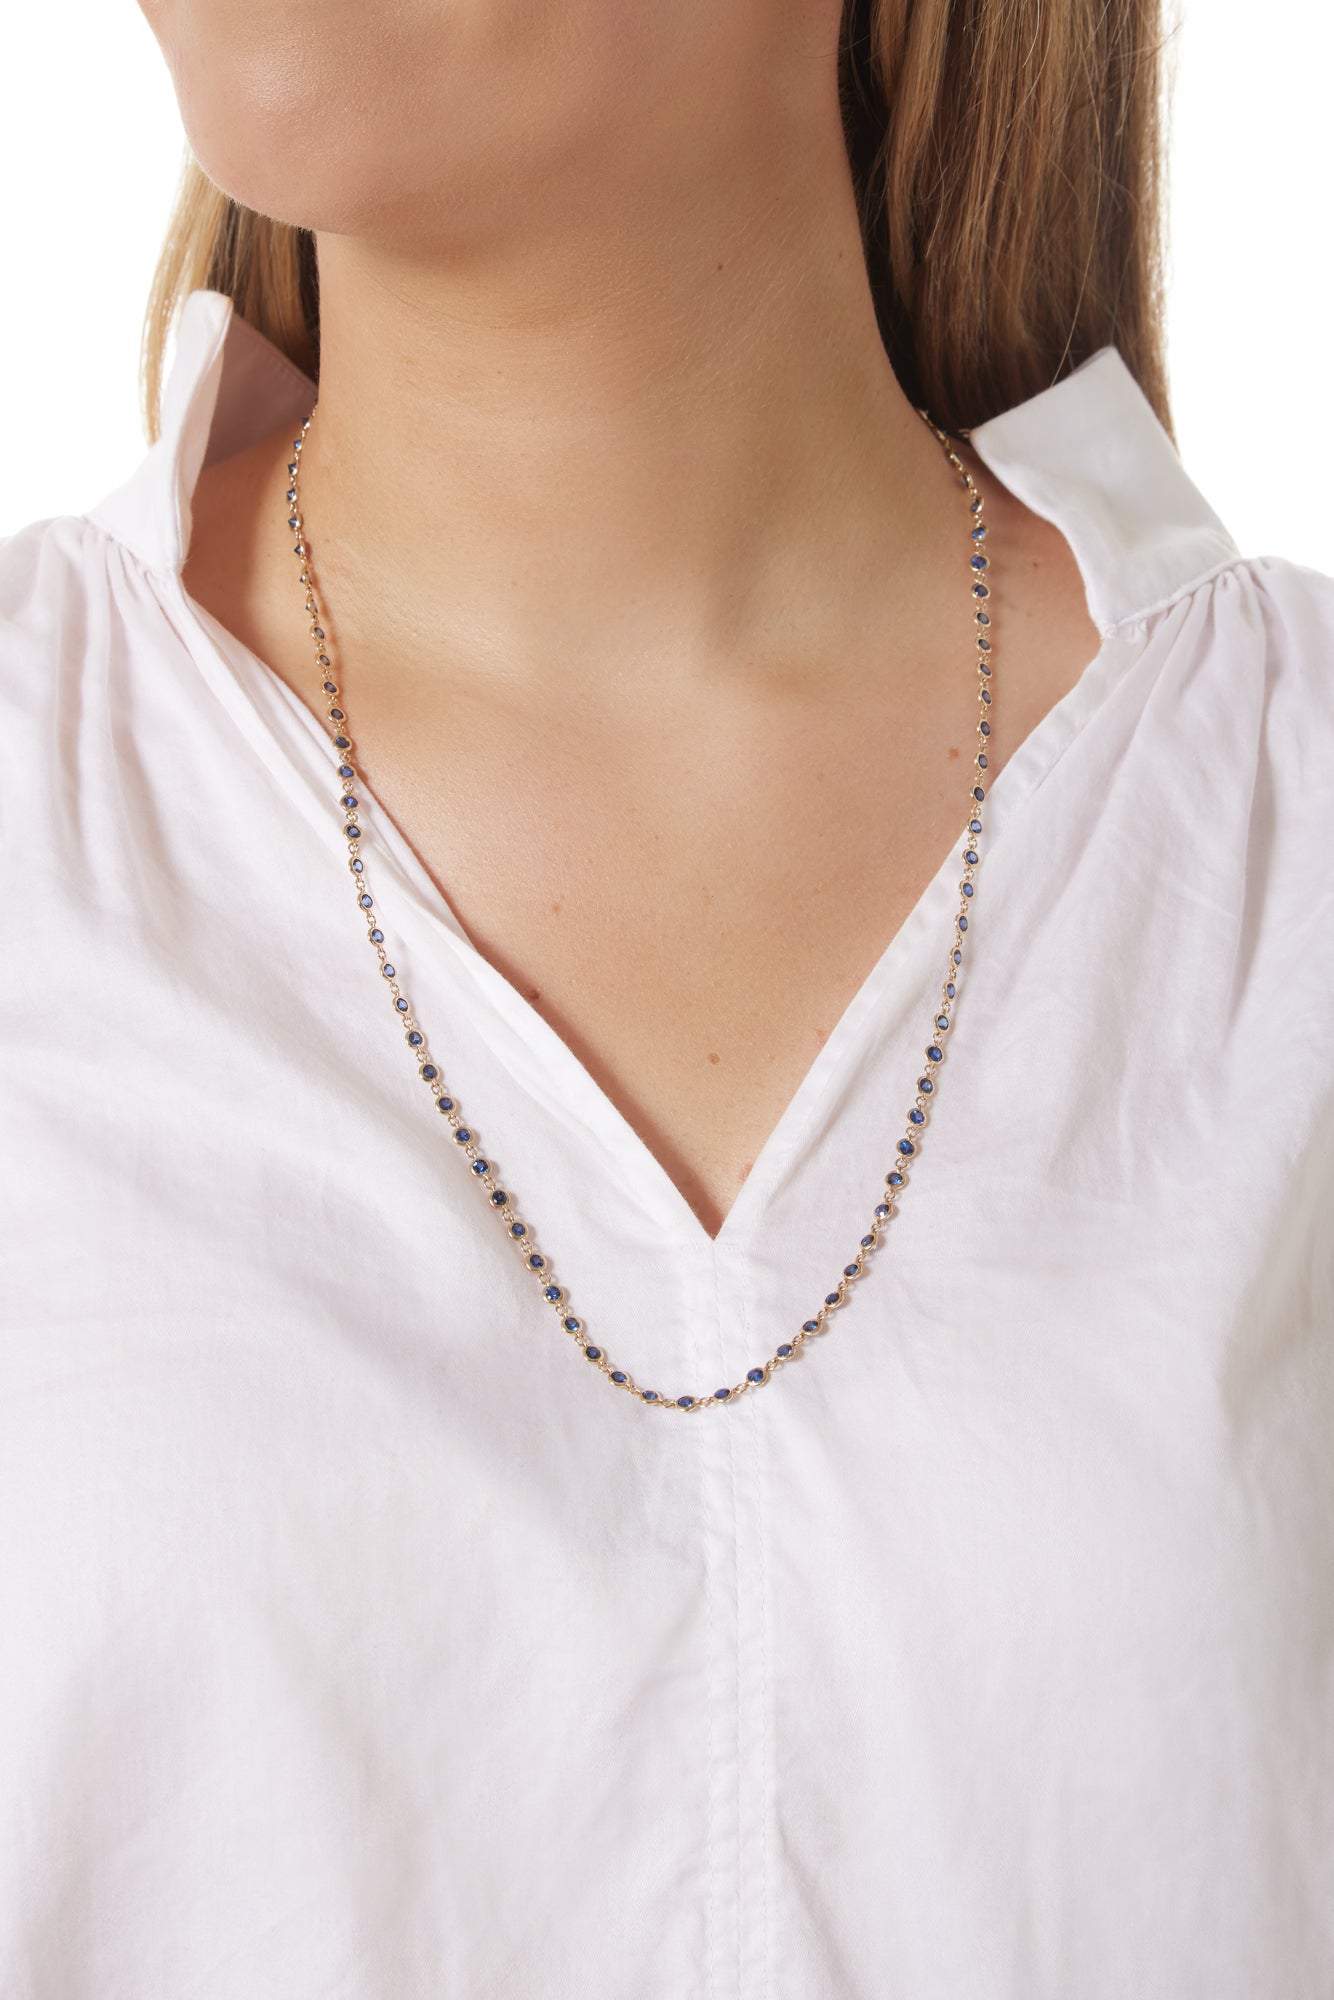 14KY Sapphire Bezel Chain Necklace